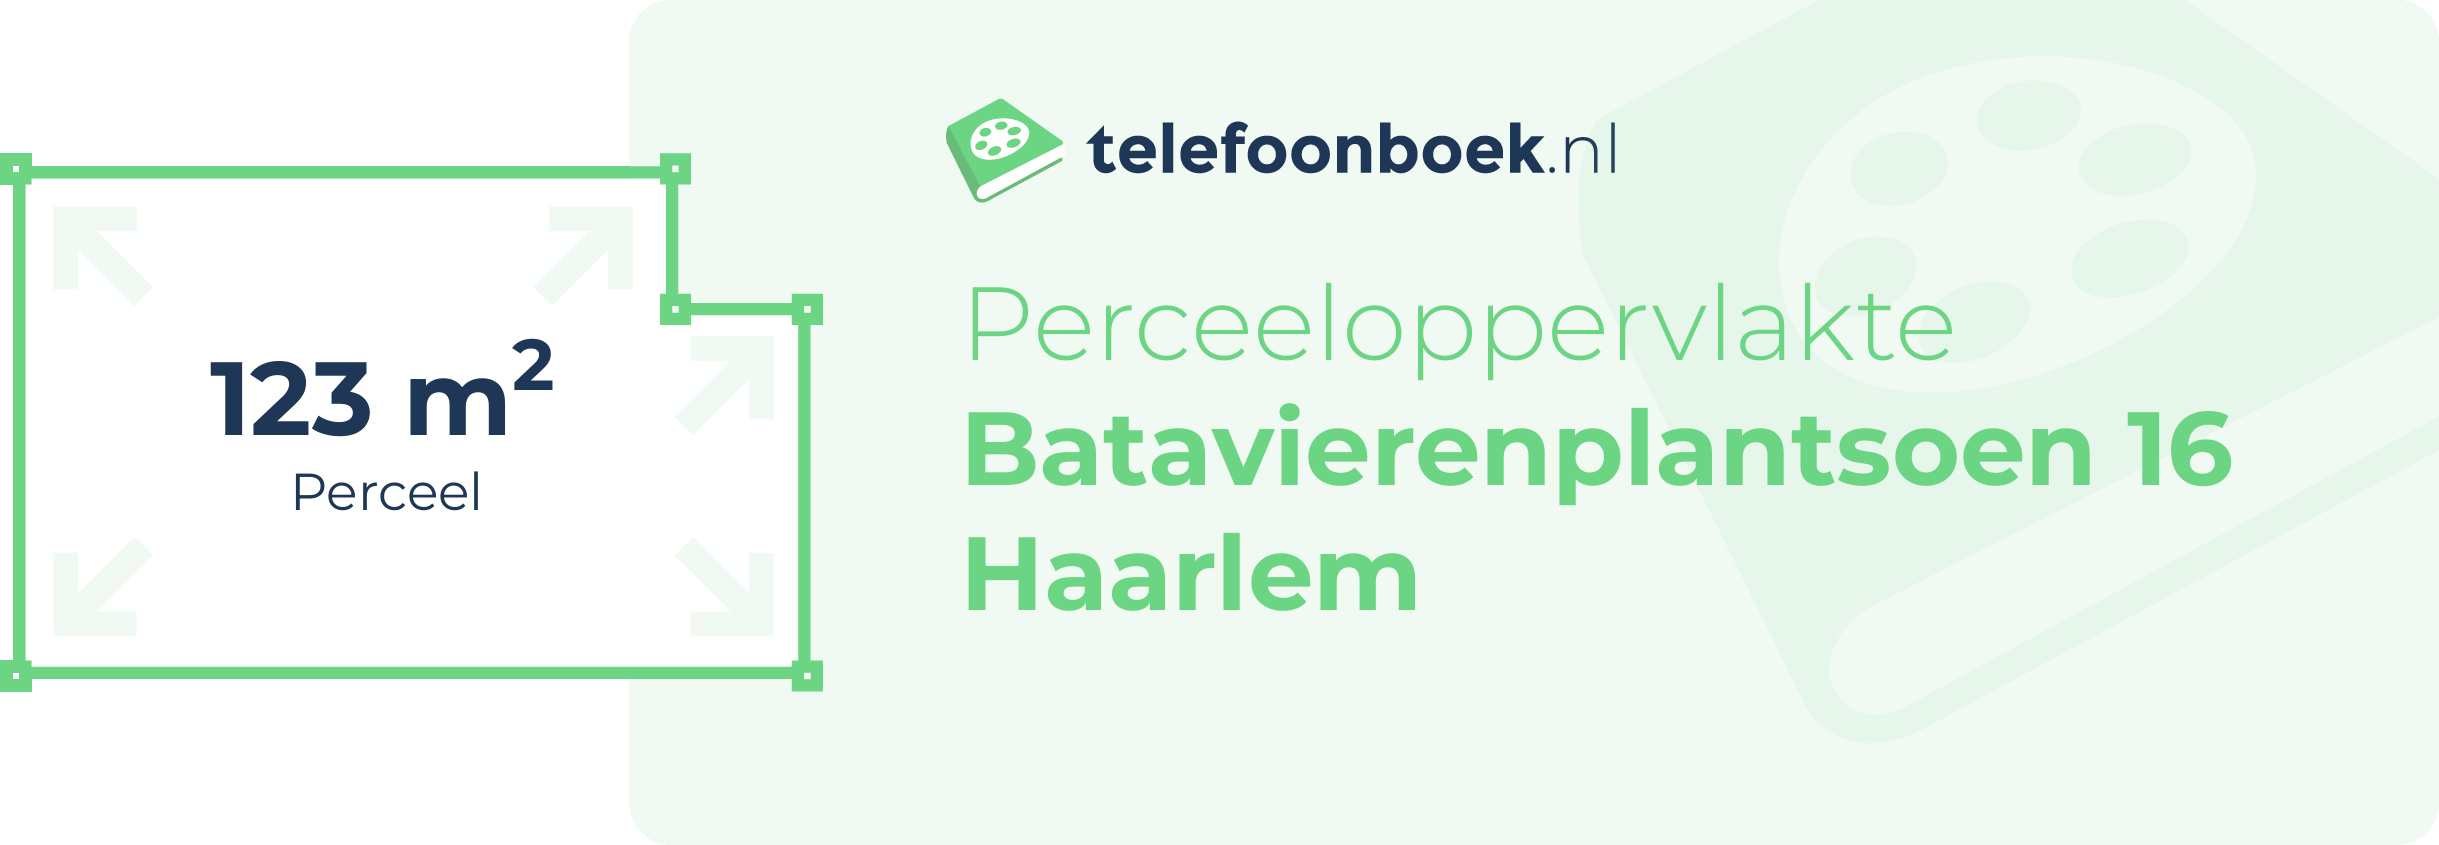 Perceeloppervlakte Batavierenplantsoen 16 Haarlem